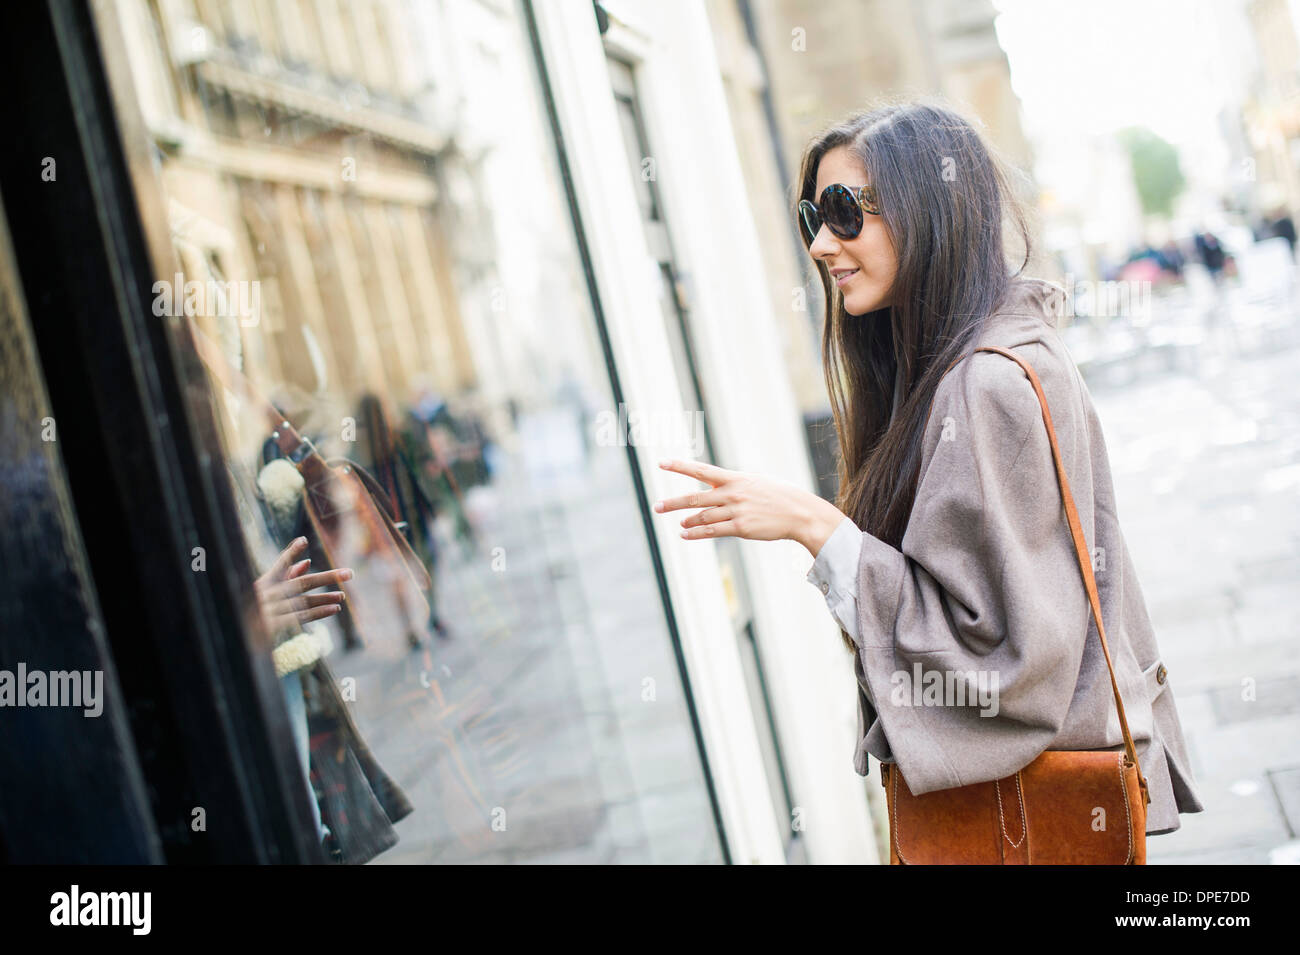 Young woman window shopping Stock Photo